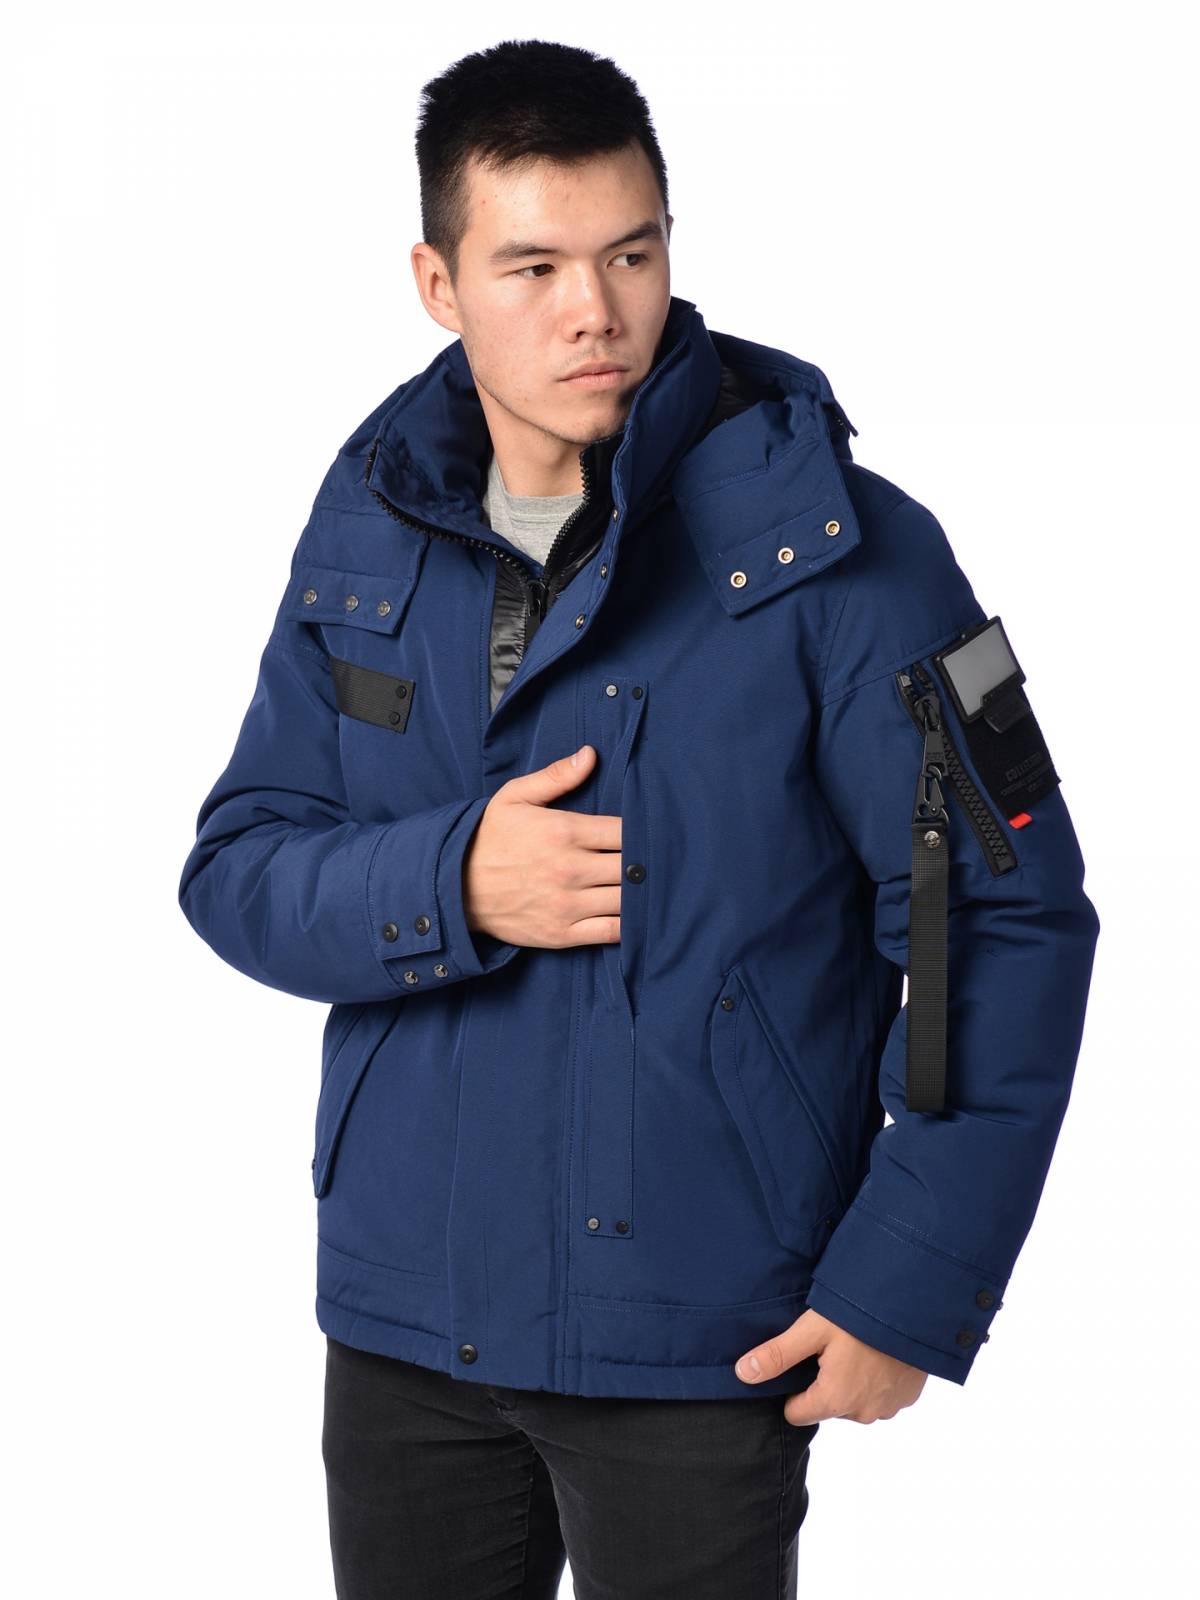 Зимняя куртка мужская Shark Force 3991 синяя 52 RU